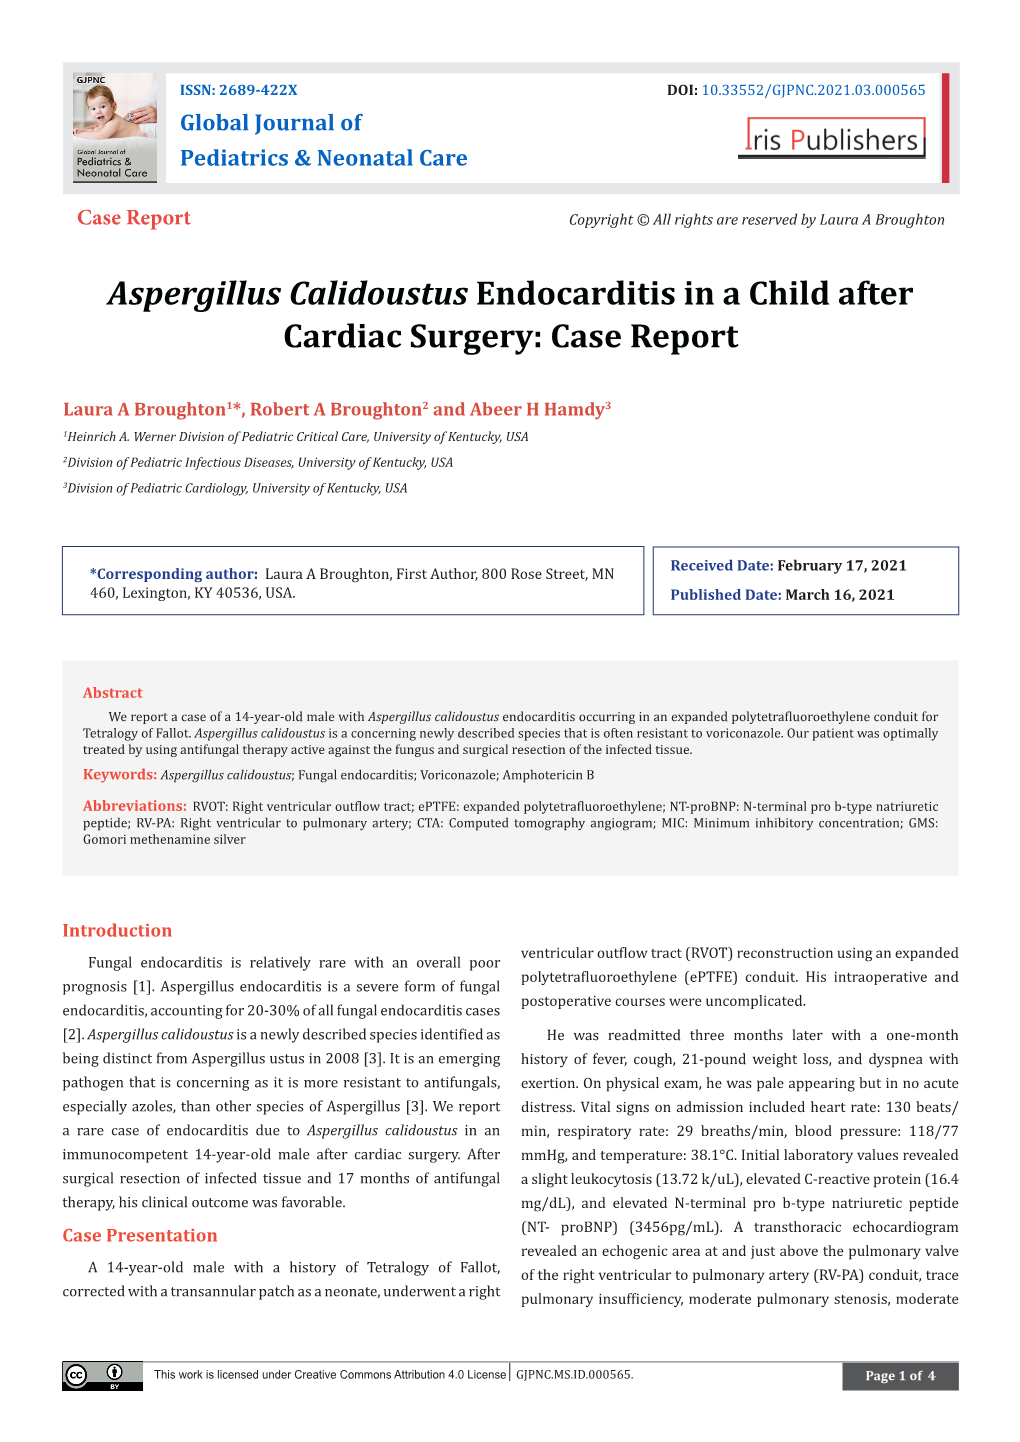 Aspergillus Calidoustus Endocarditis in a Child After Cardiac Surgery: Case Report